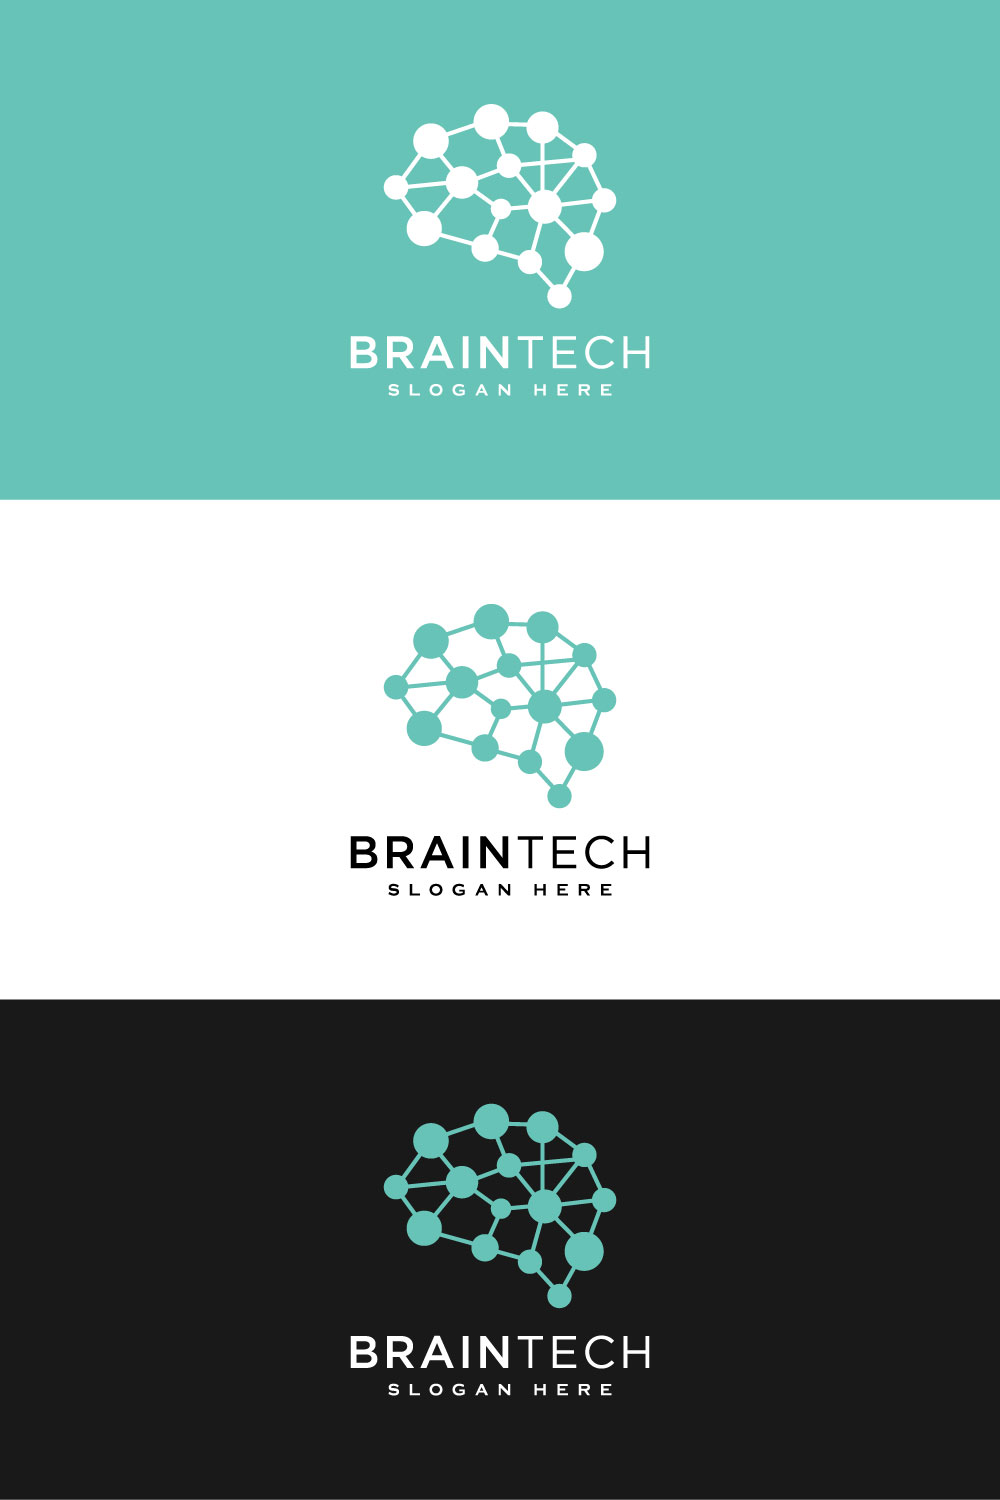 Brain Technology Logo Design Line Style Pinterest Image.